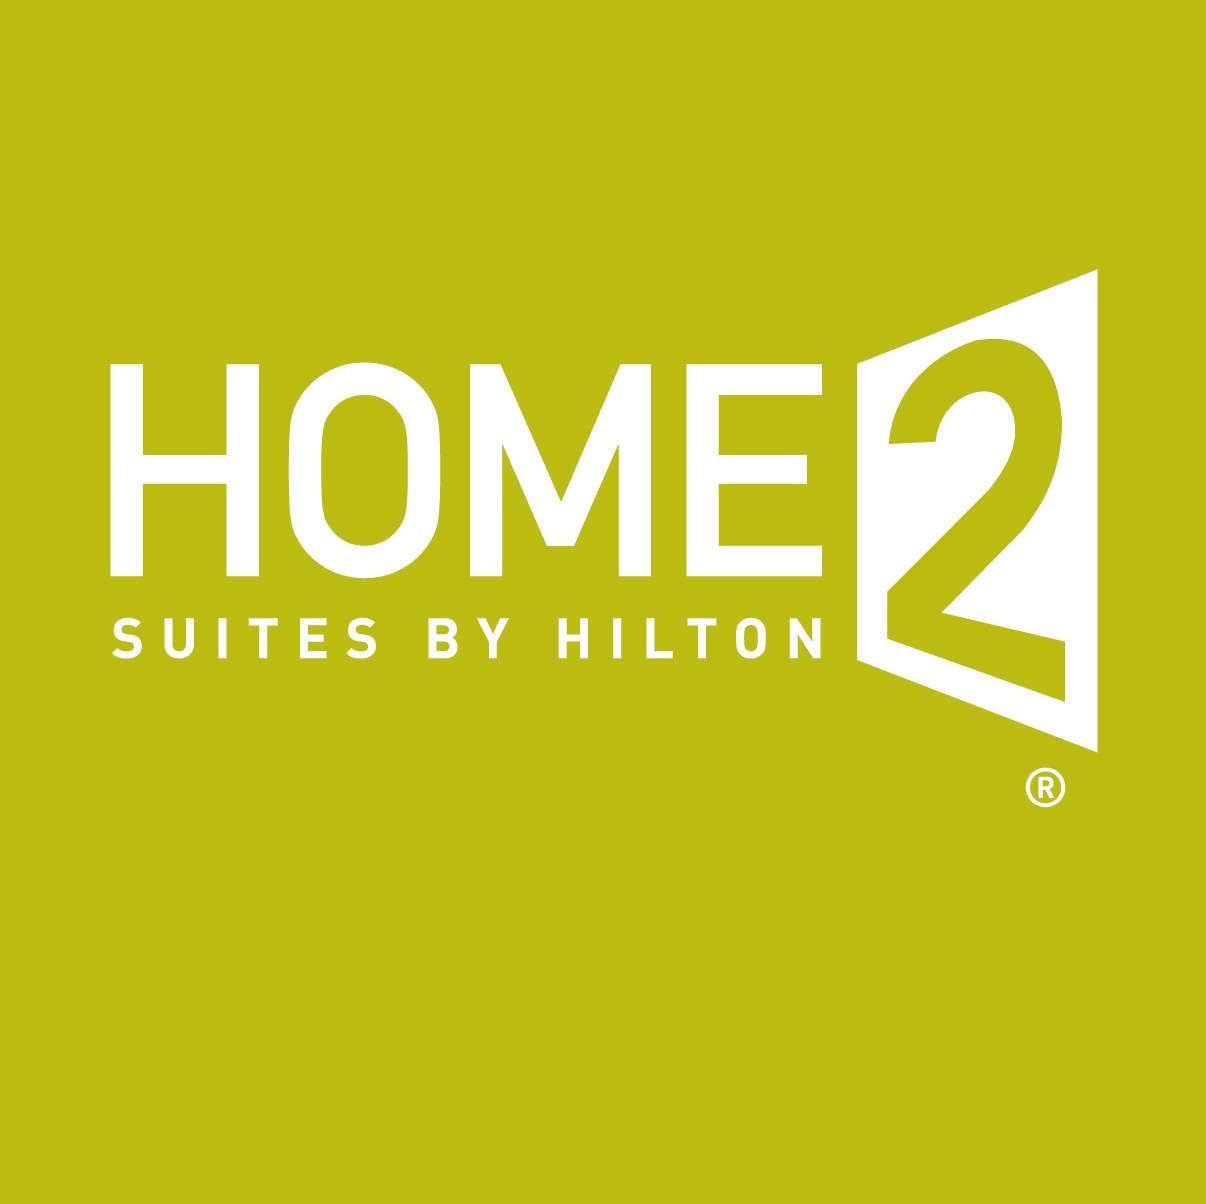 Home2 Logo - Home2 suites Logos